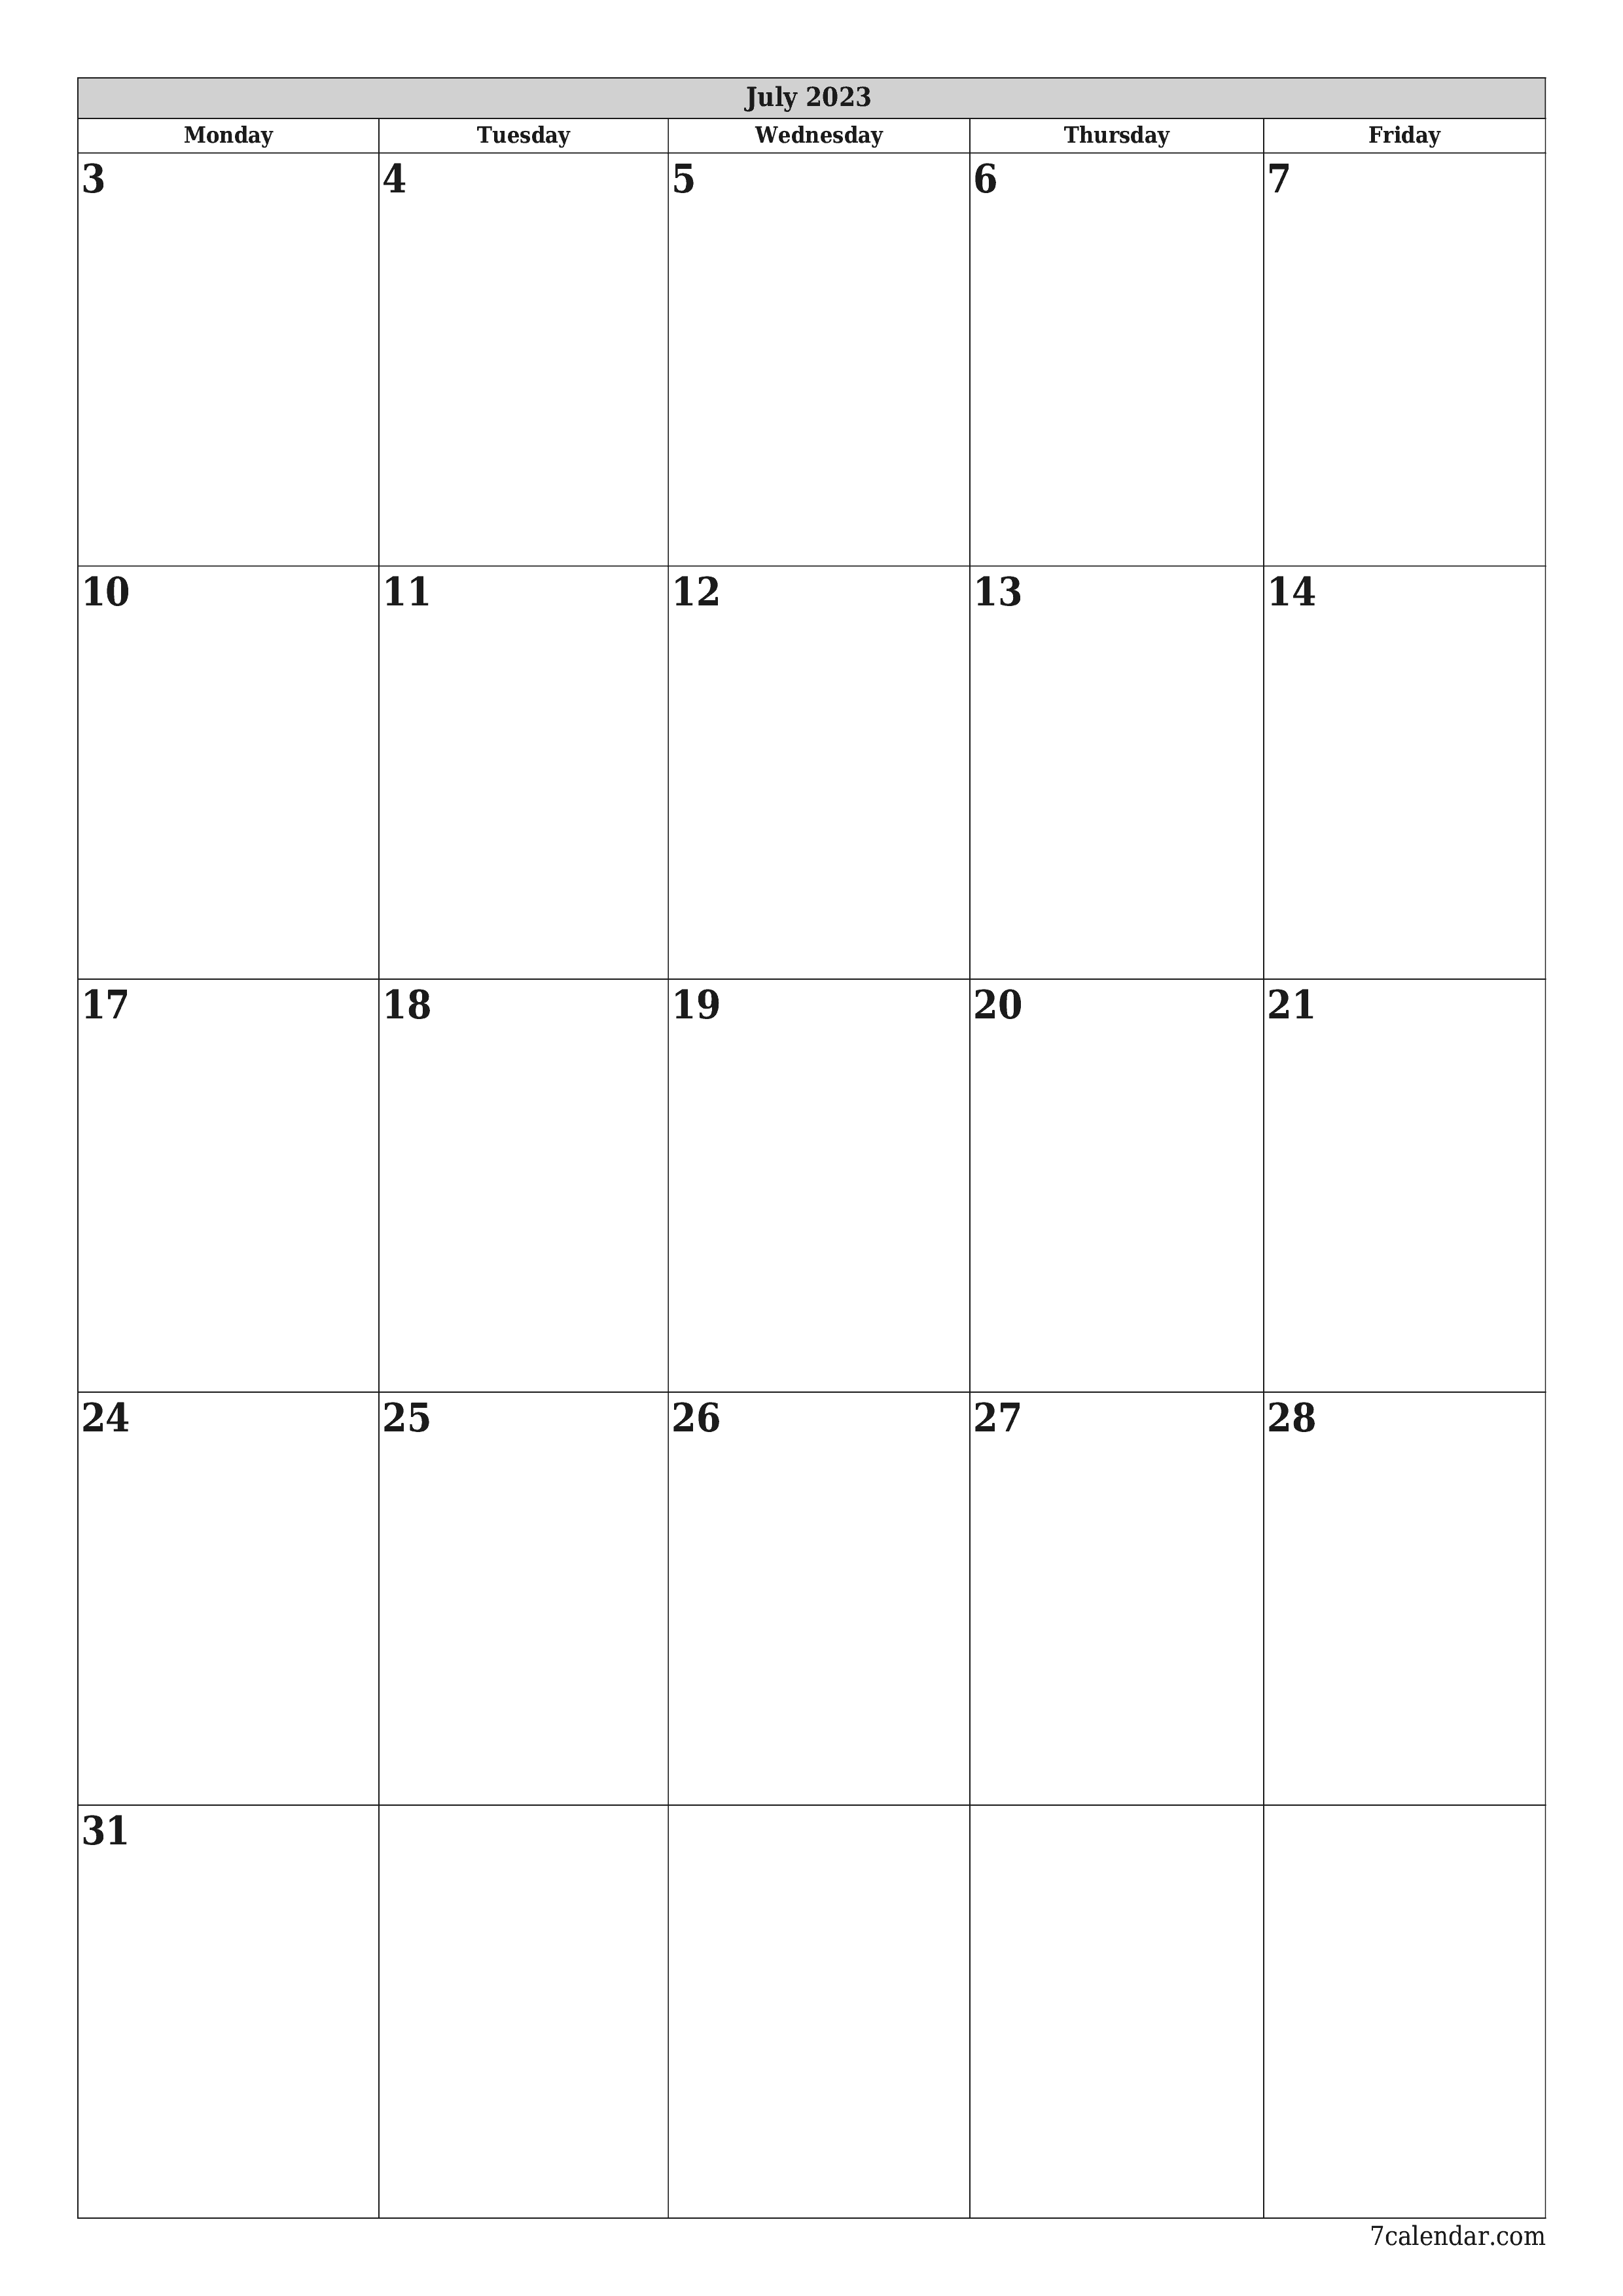 Blank calendar July 2023